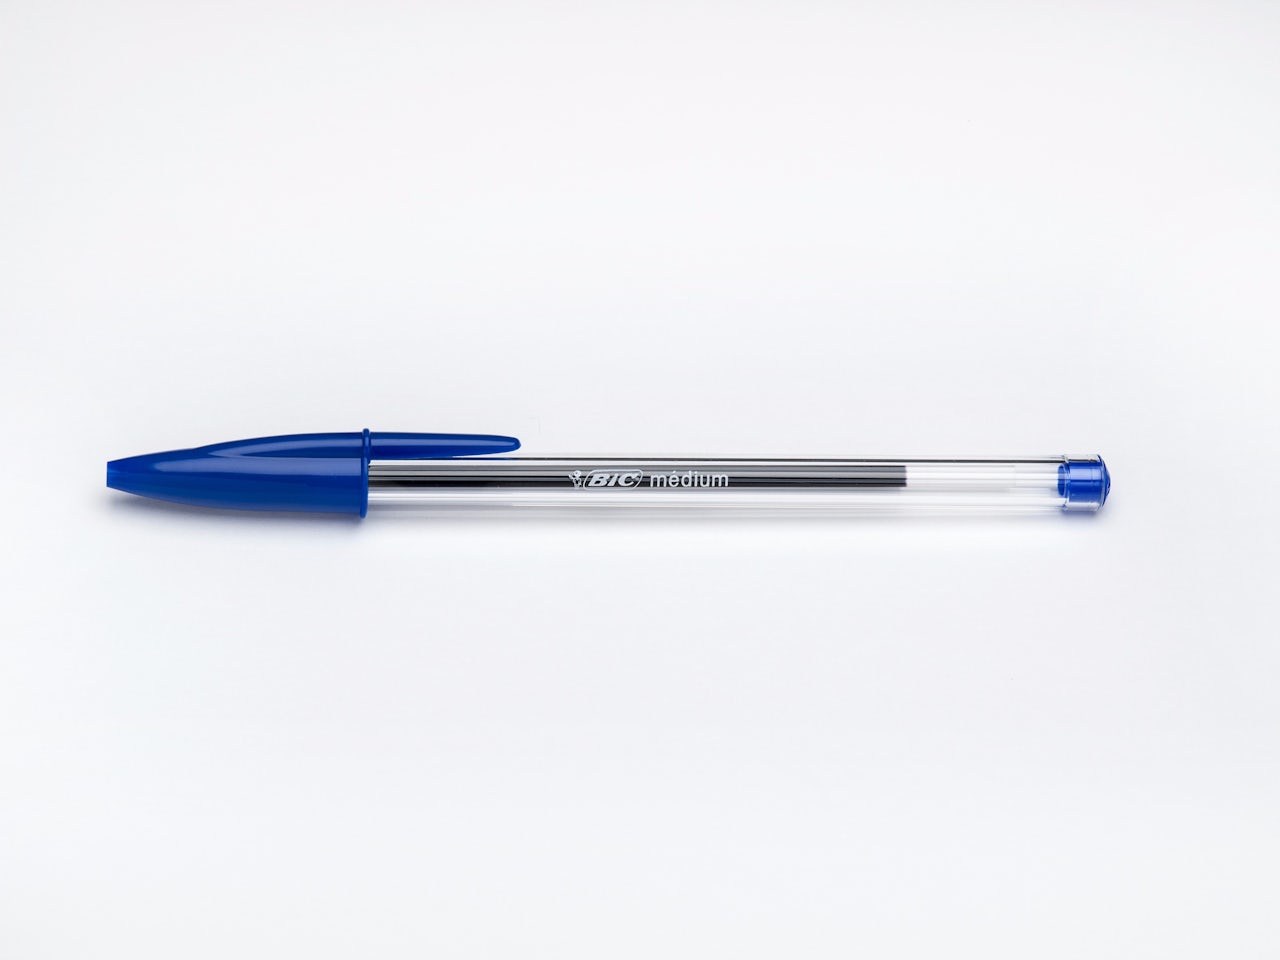 Gold Standard: the Bic Cristal pen